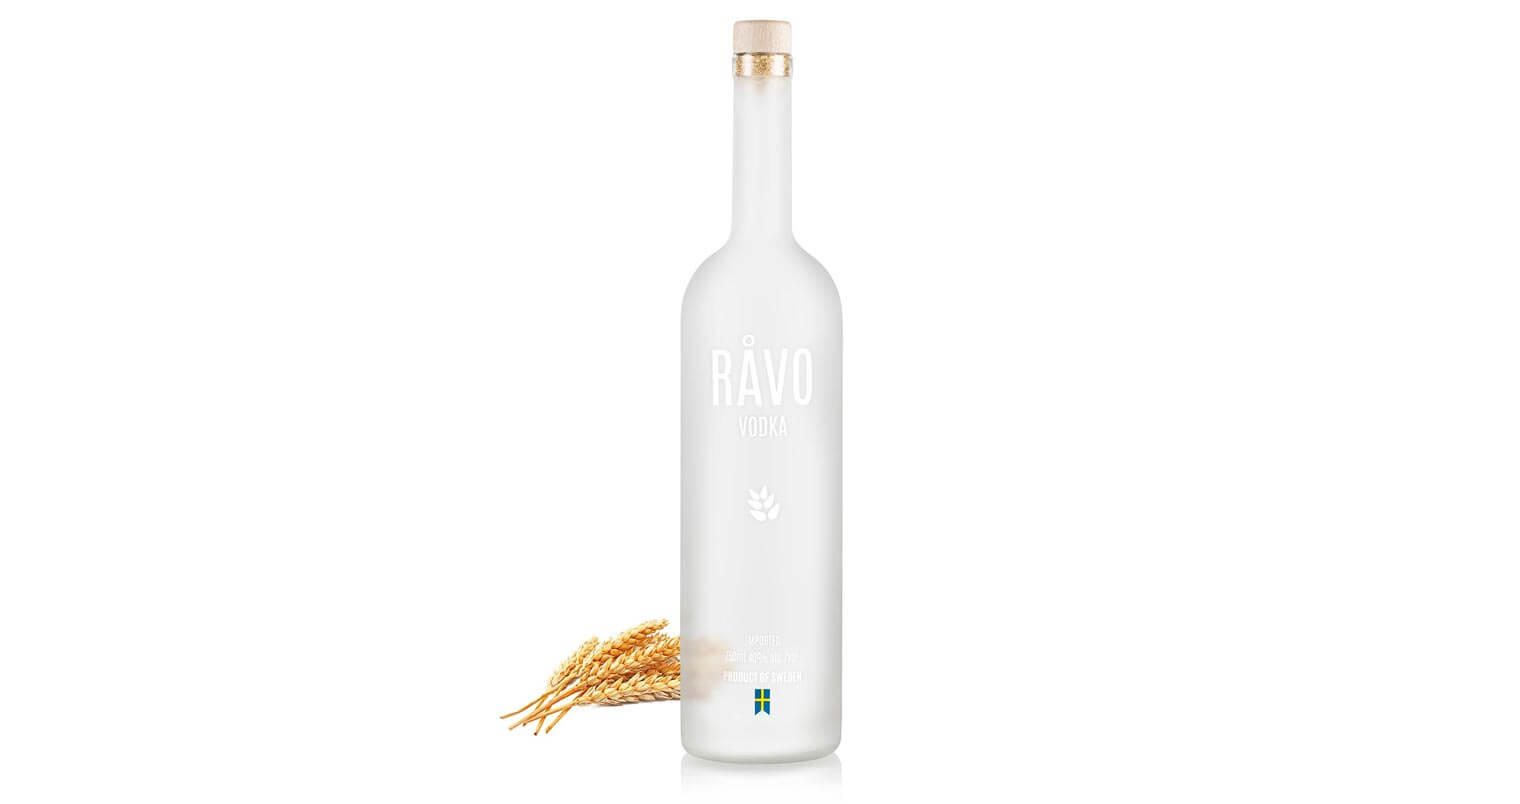 RÅVO Vodka, bottle on white, featured image